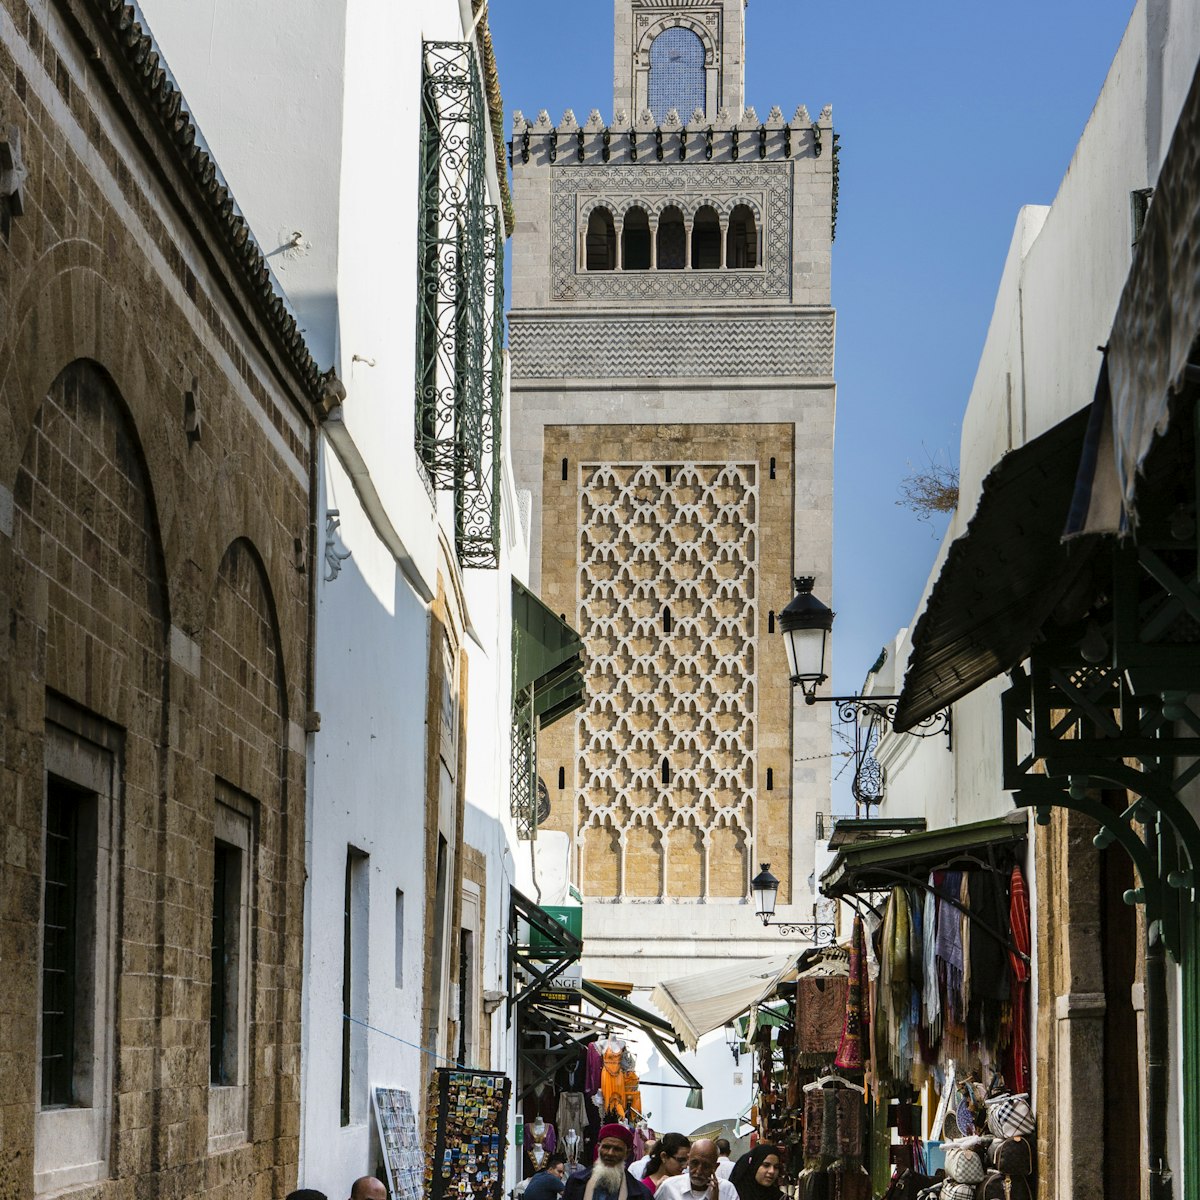 Zaytouna (Great) Mosque & street in Medina